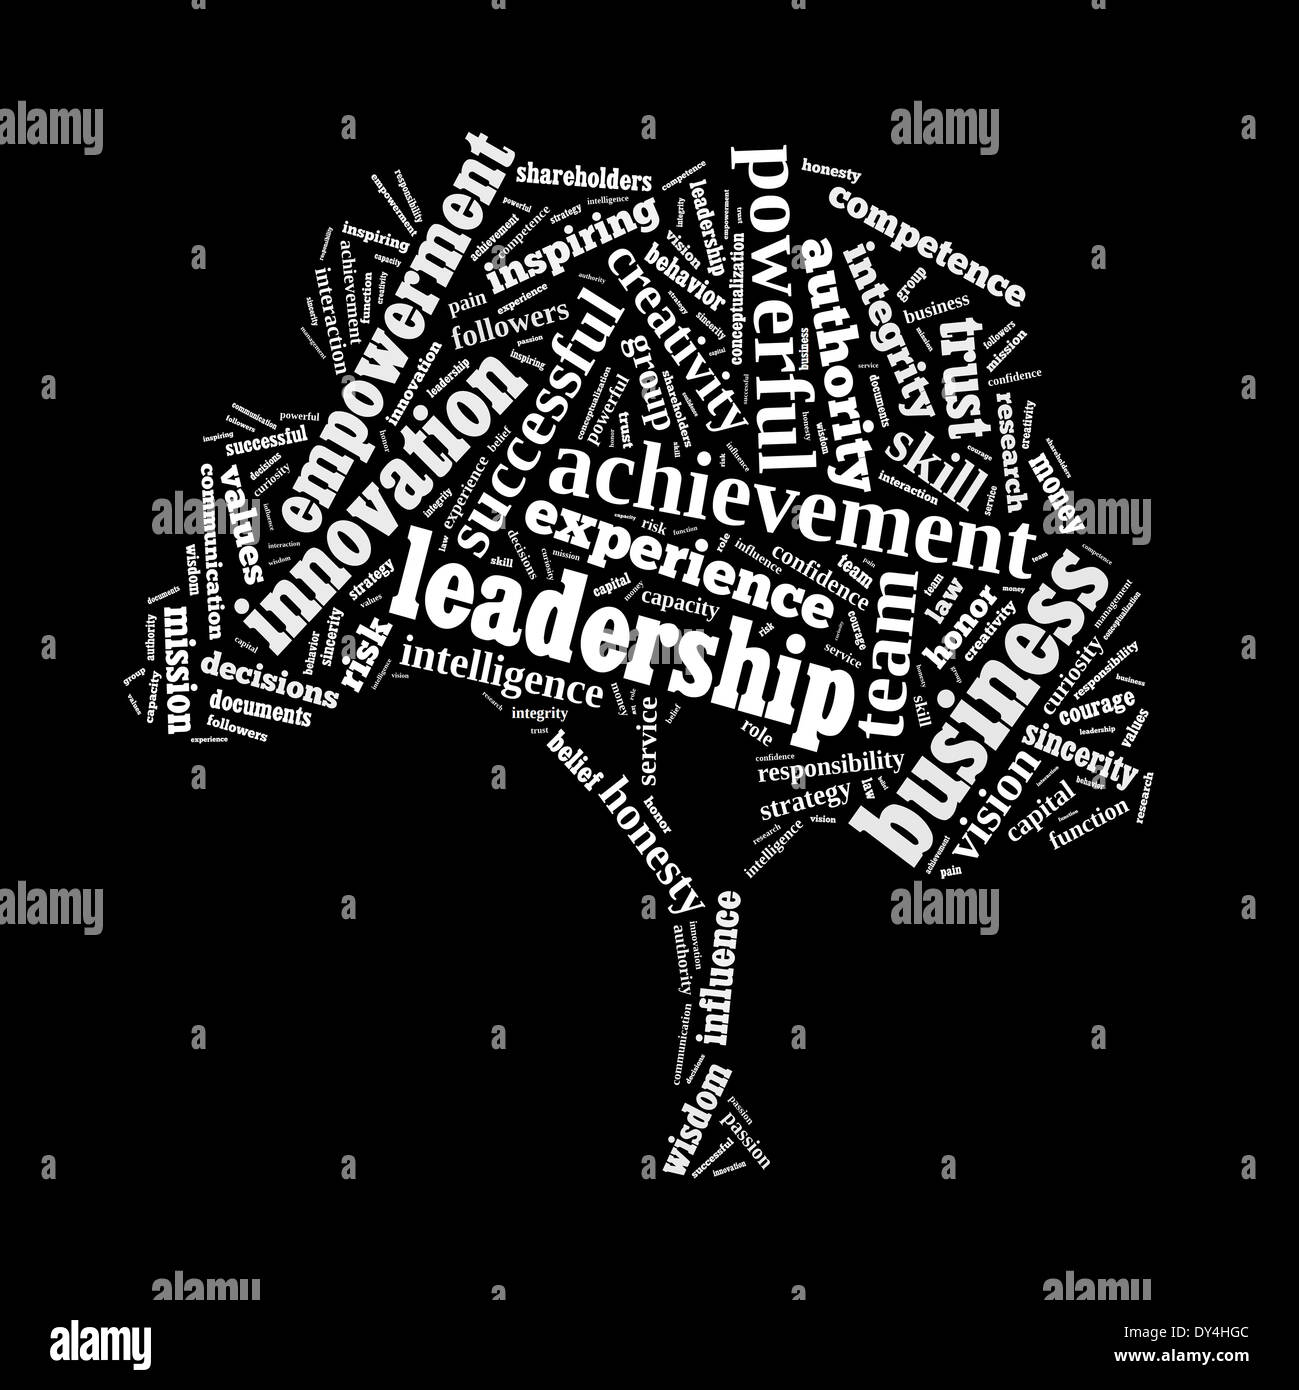 Leadership word cloud conceptual image Stock Photo